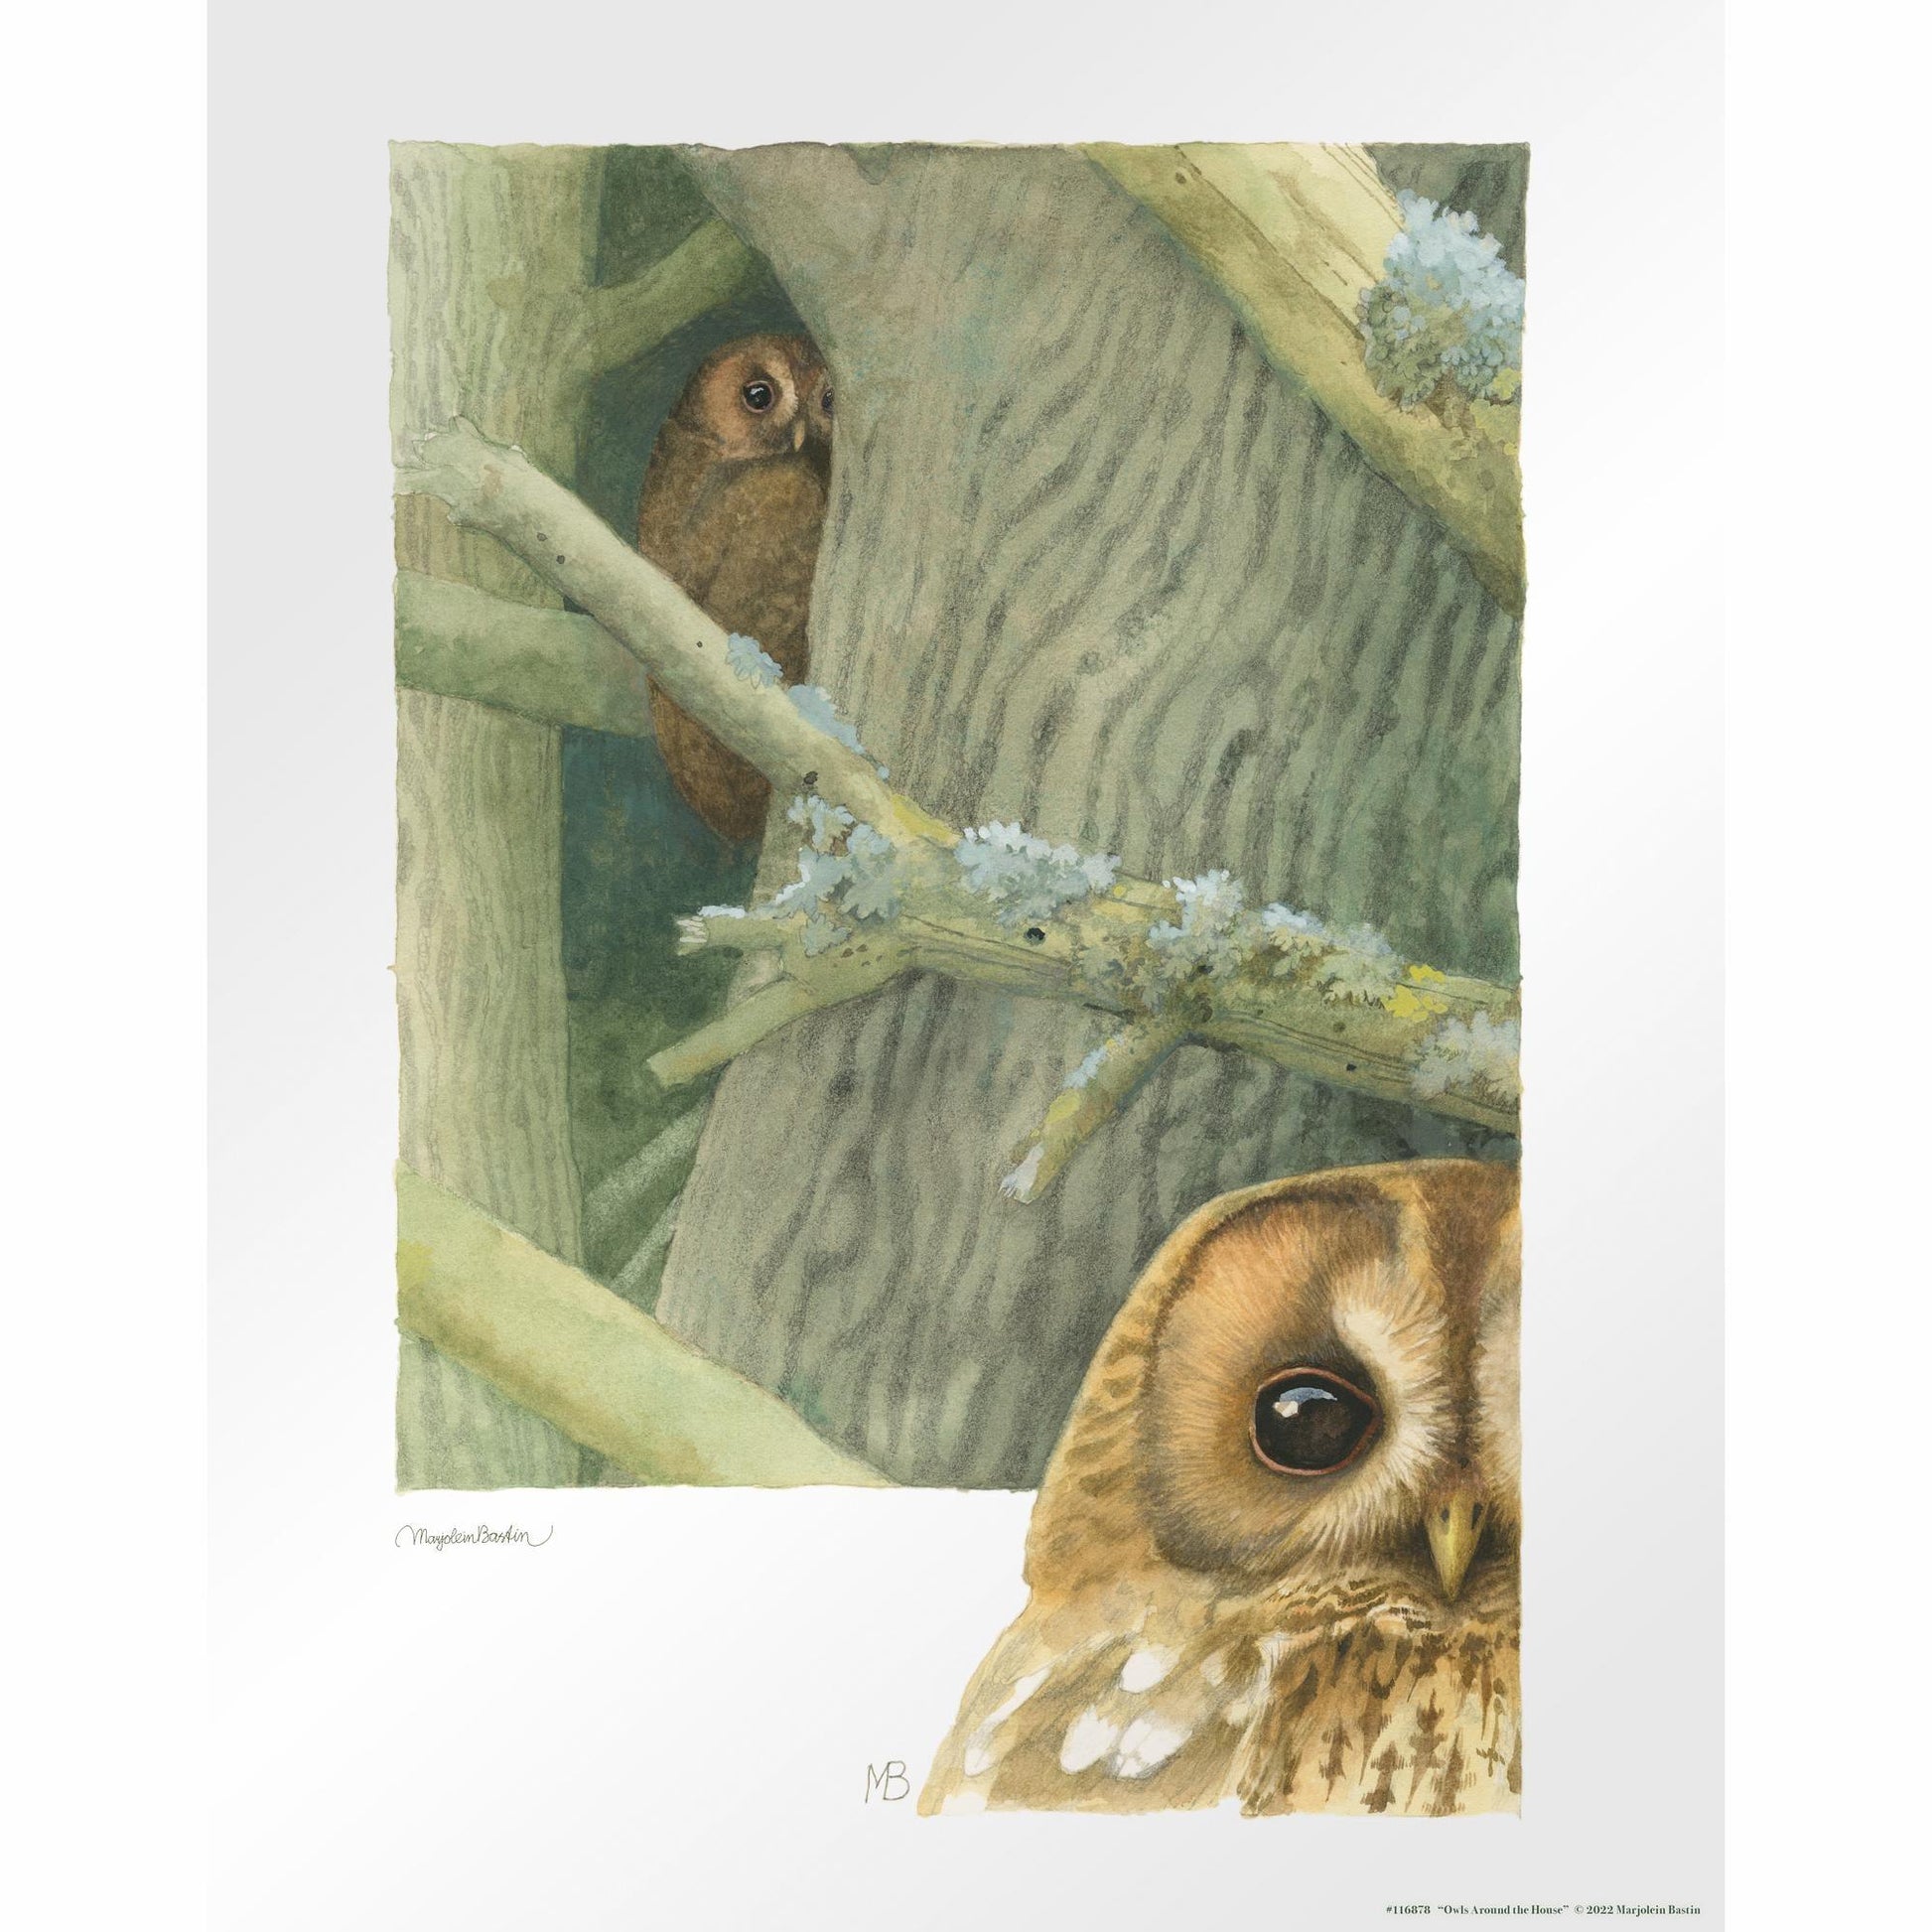 owls-around-the-house14x11-apbastin-1058590030.jpg